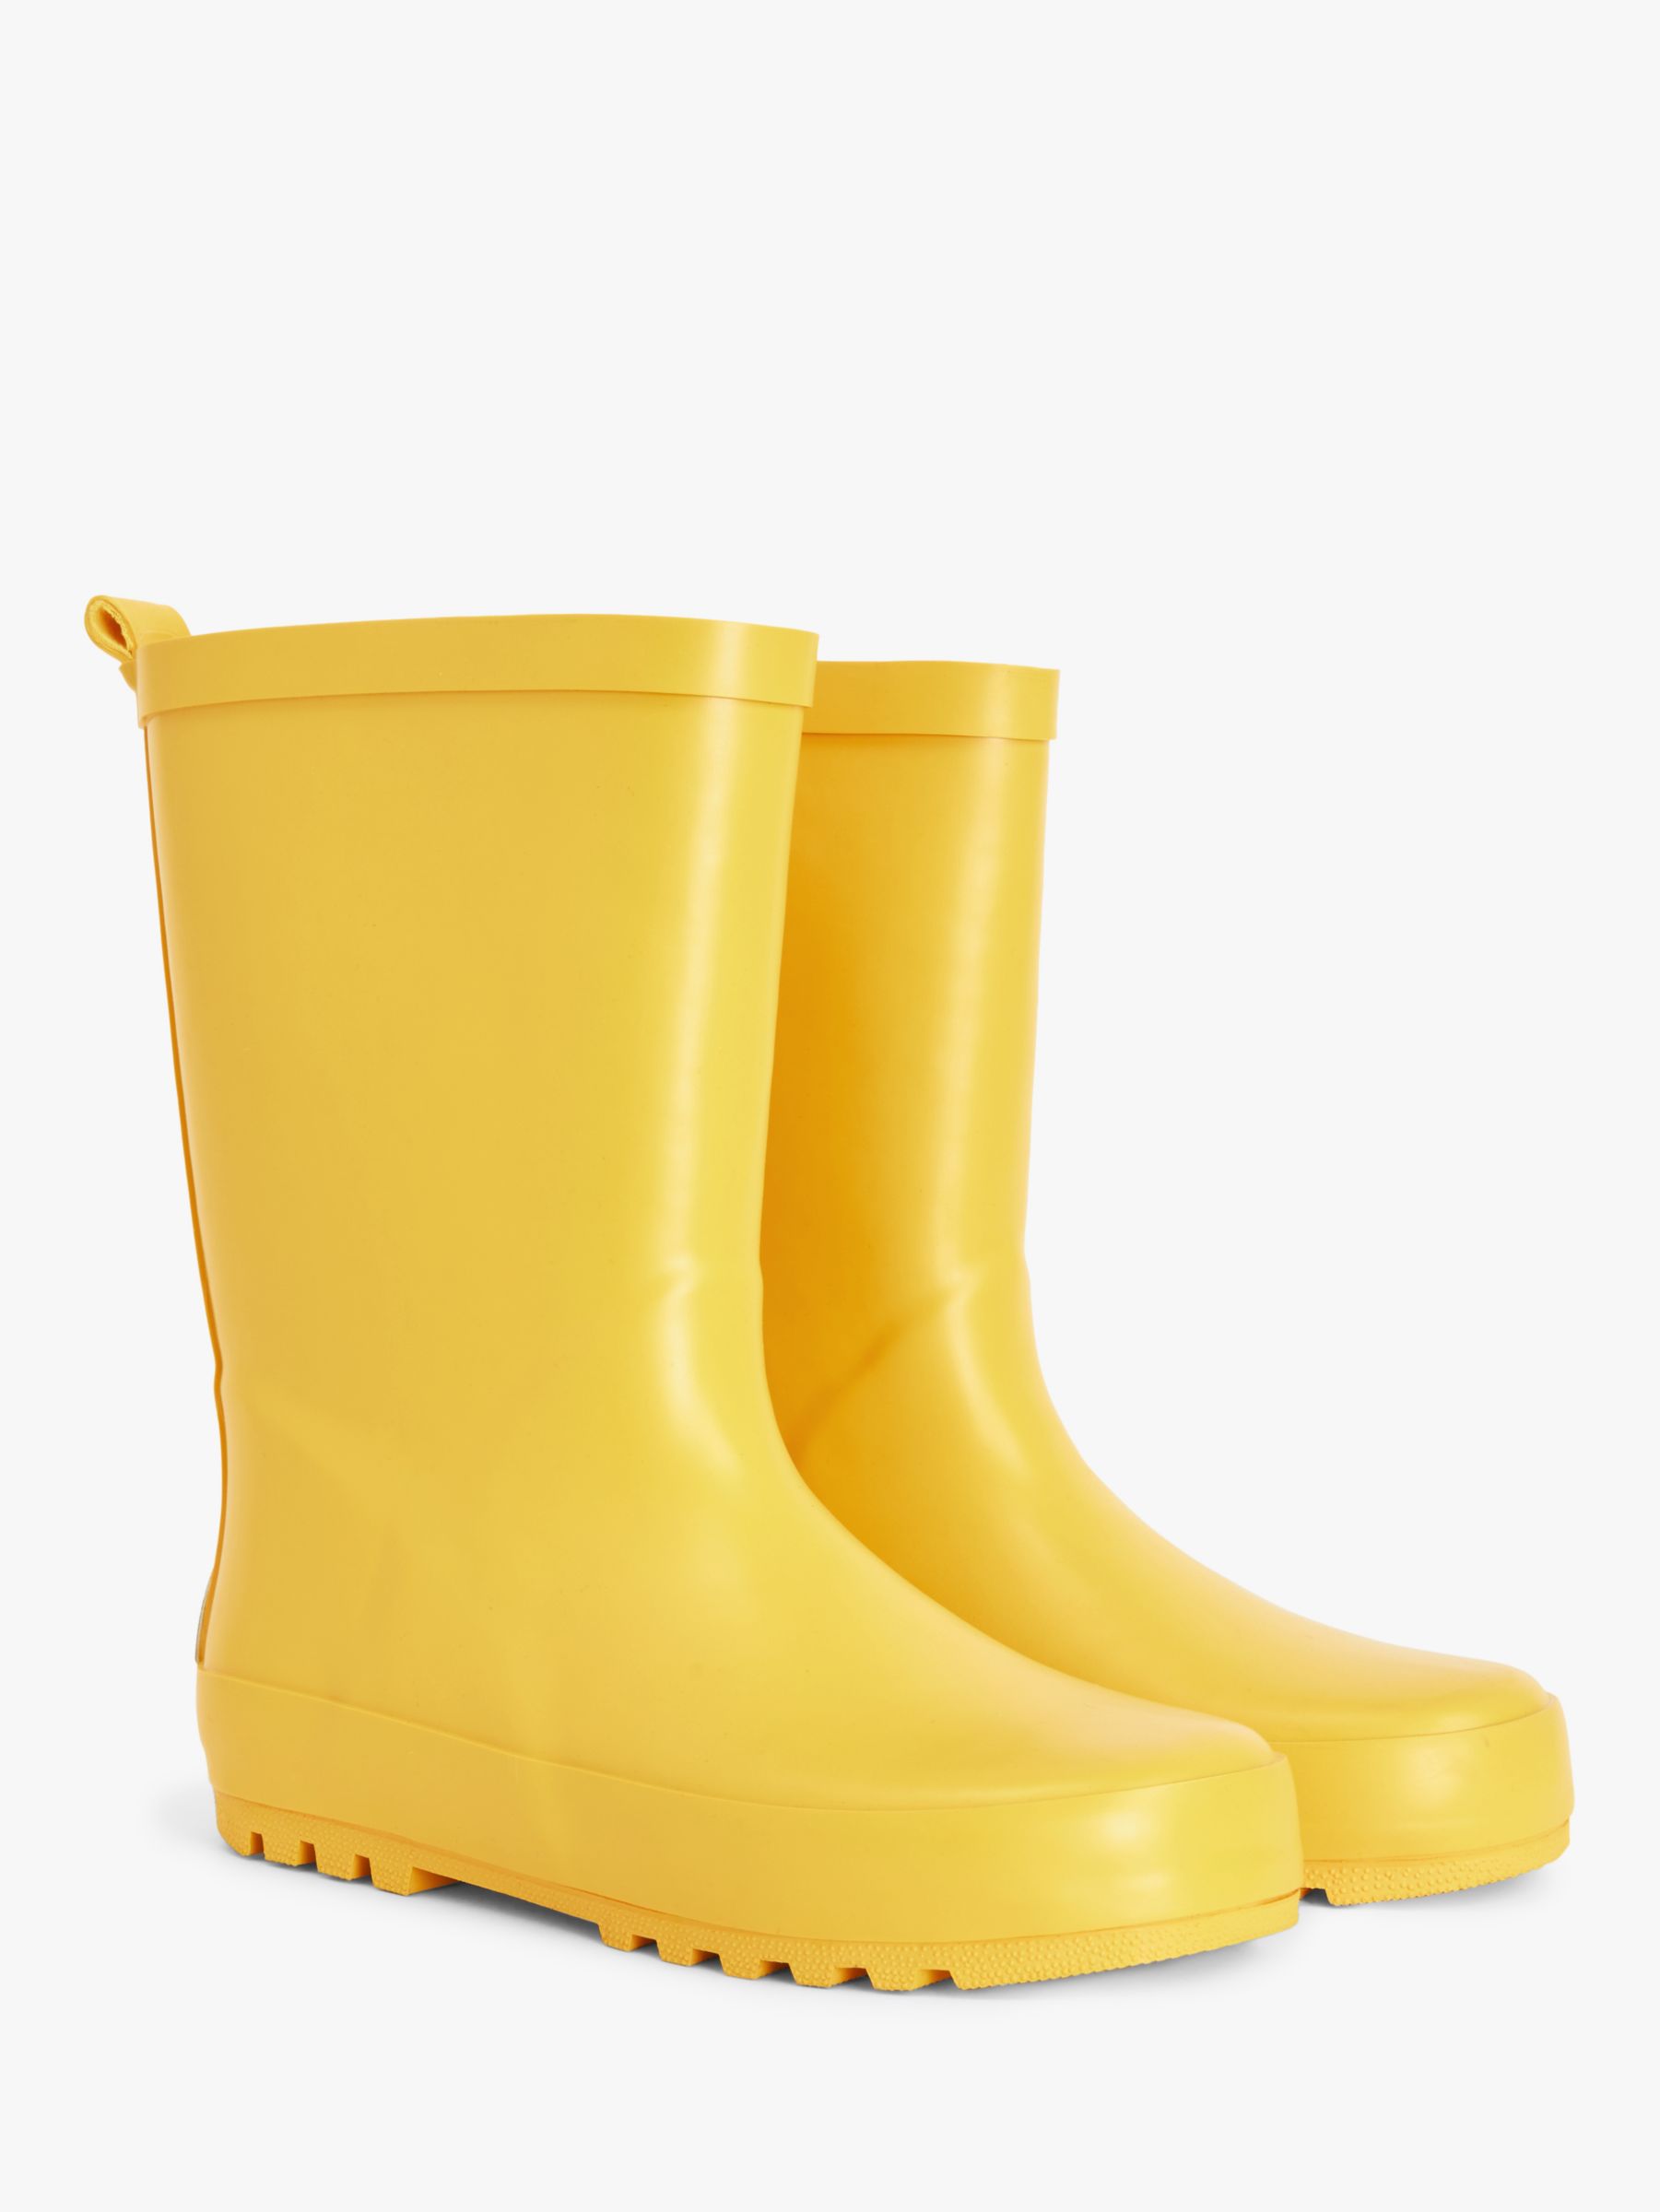 John Lewis ANYDAY Kids' Wellington Boots, Yellow at John Lewis & Partners